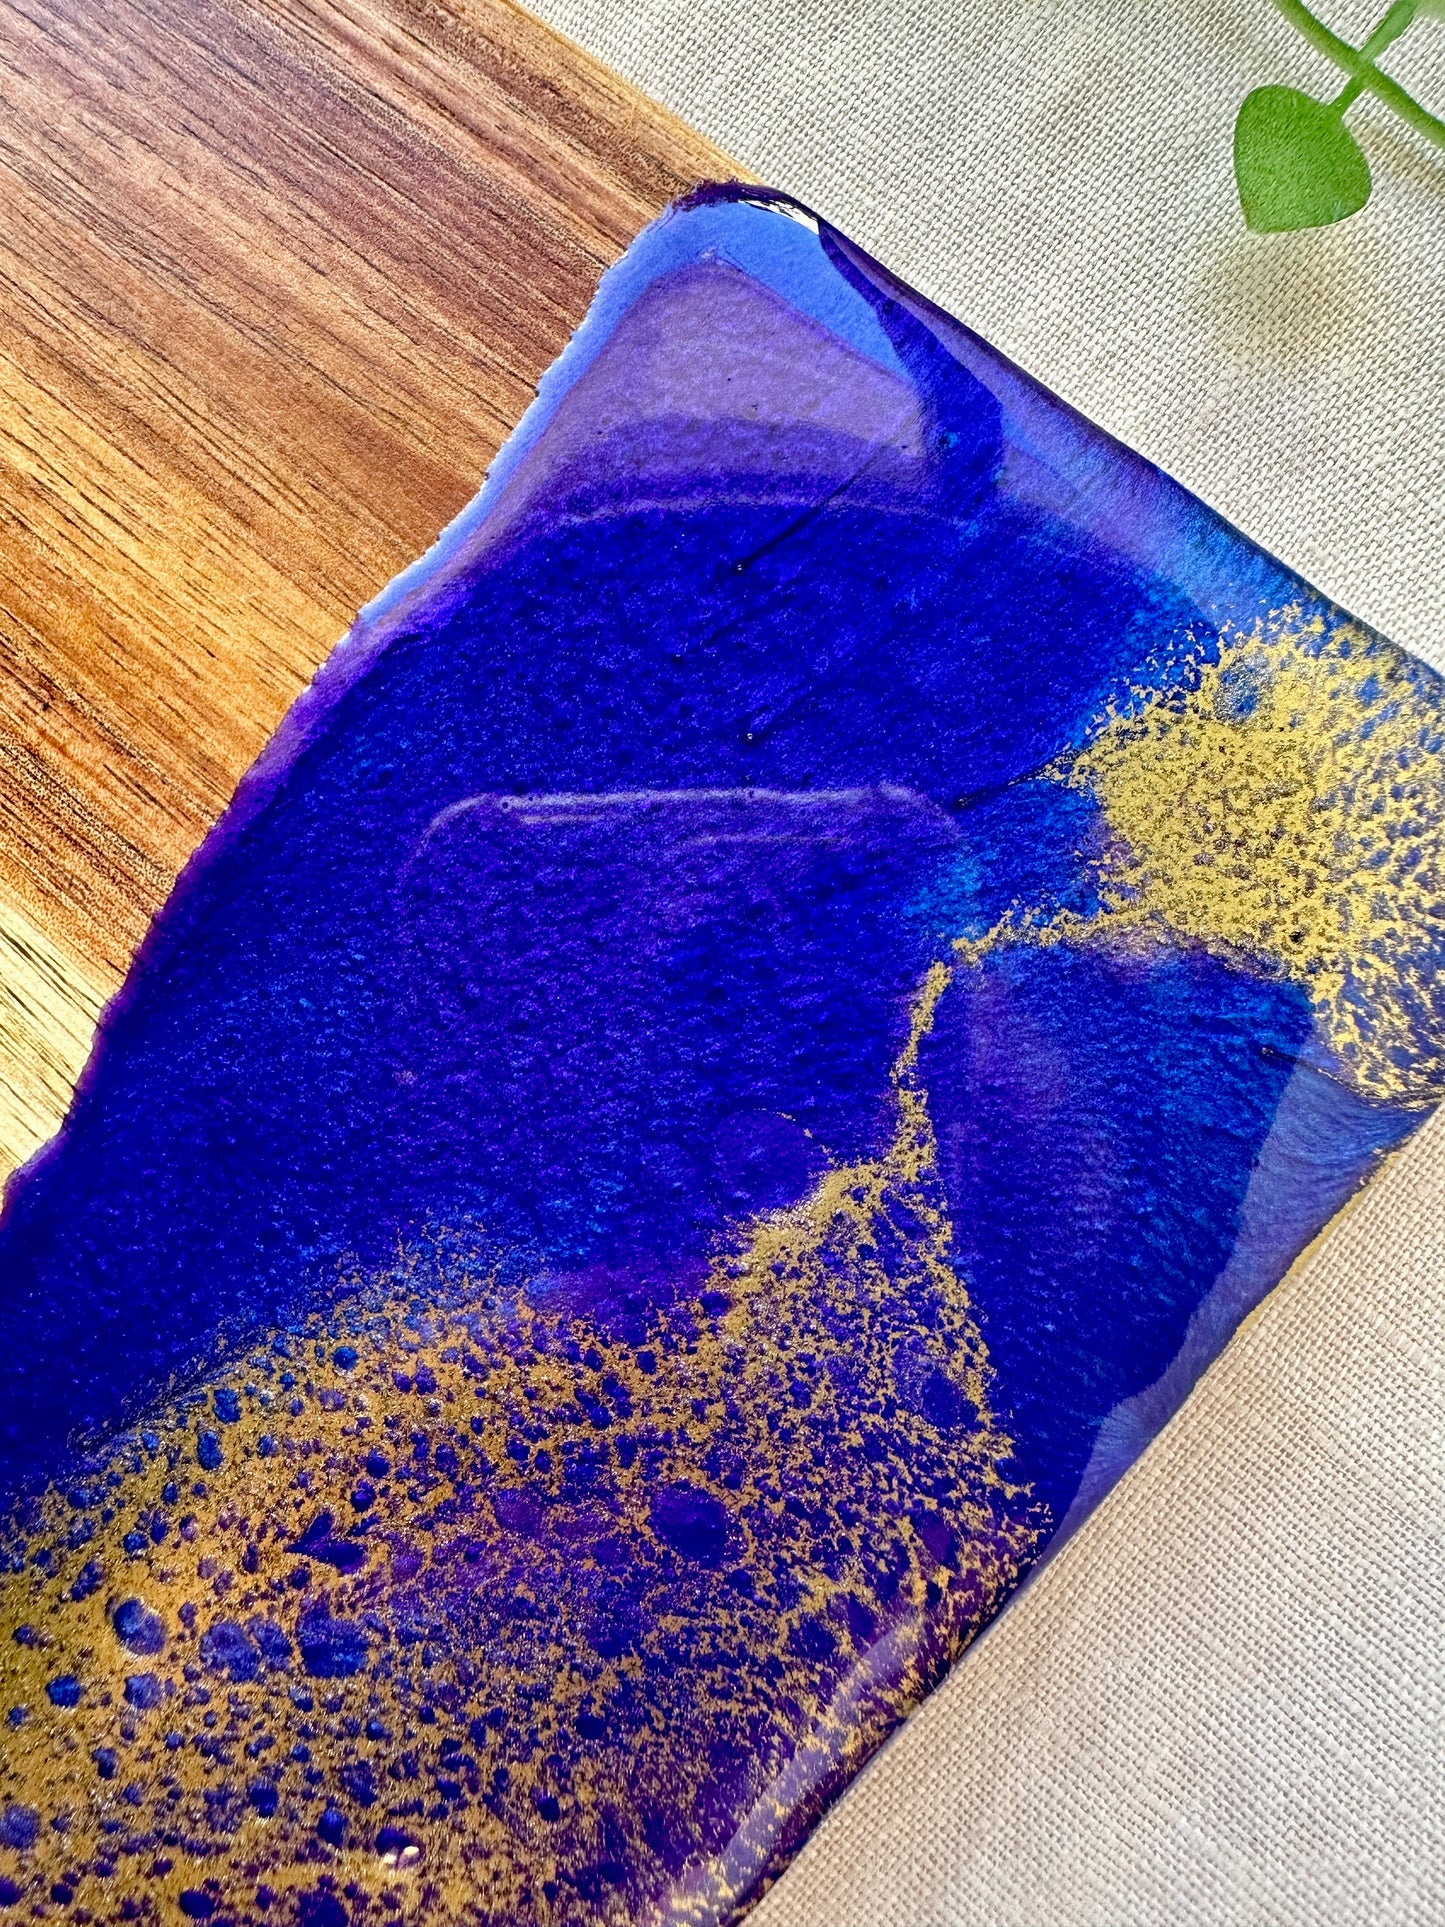 SERVING BOARD - metallic purple, electric blue and gold board